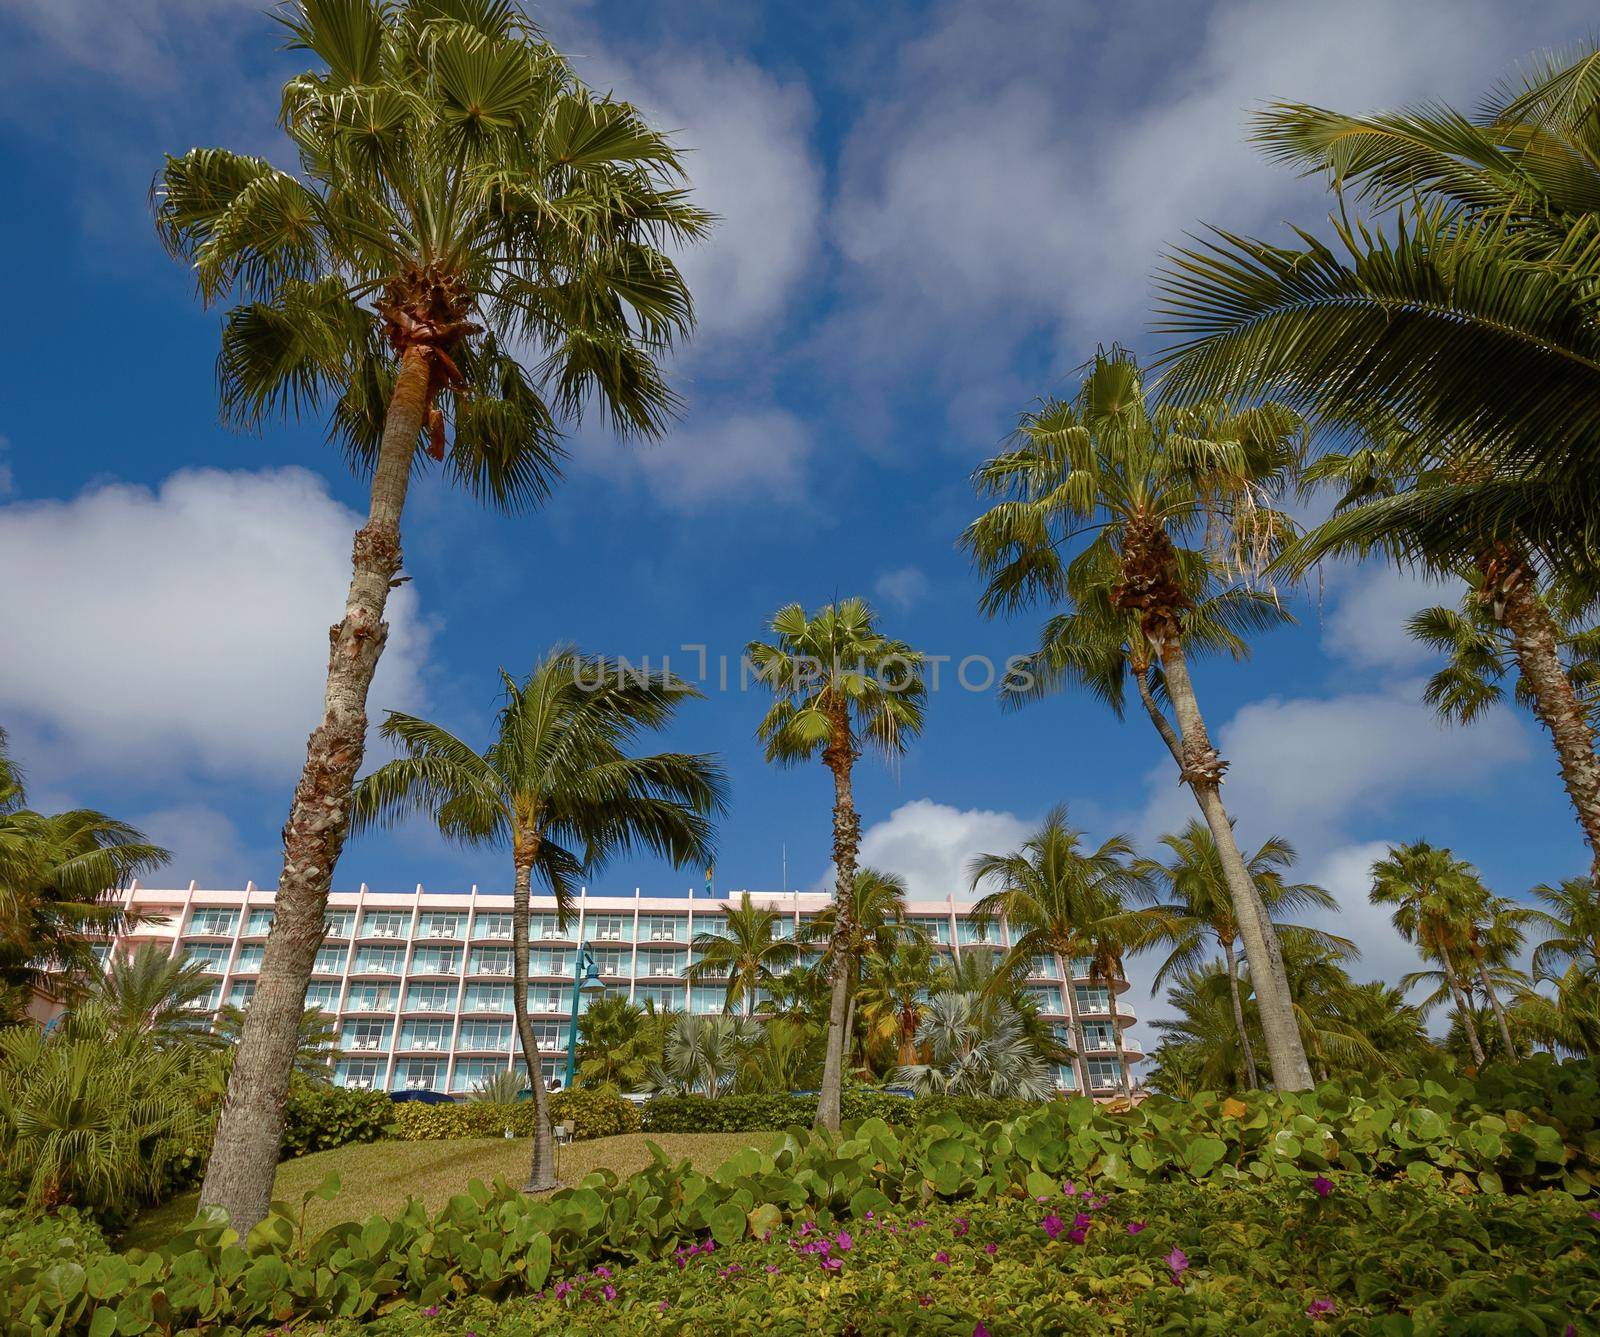 Hotel Resort in Dream Destination of Nassau, Bahamas.